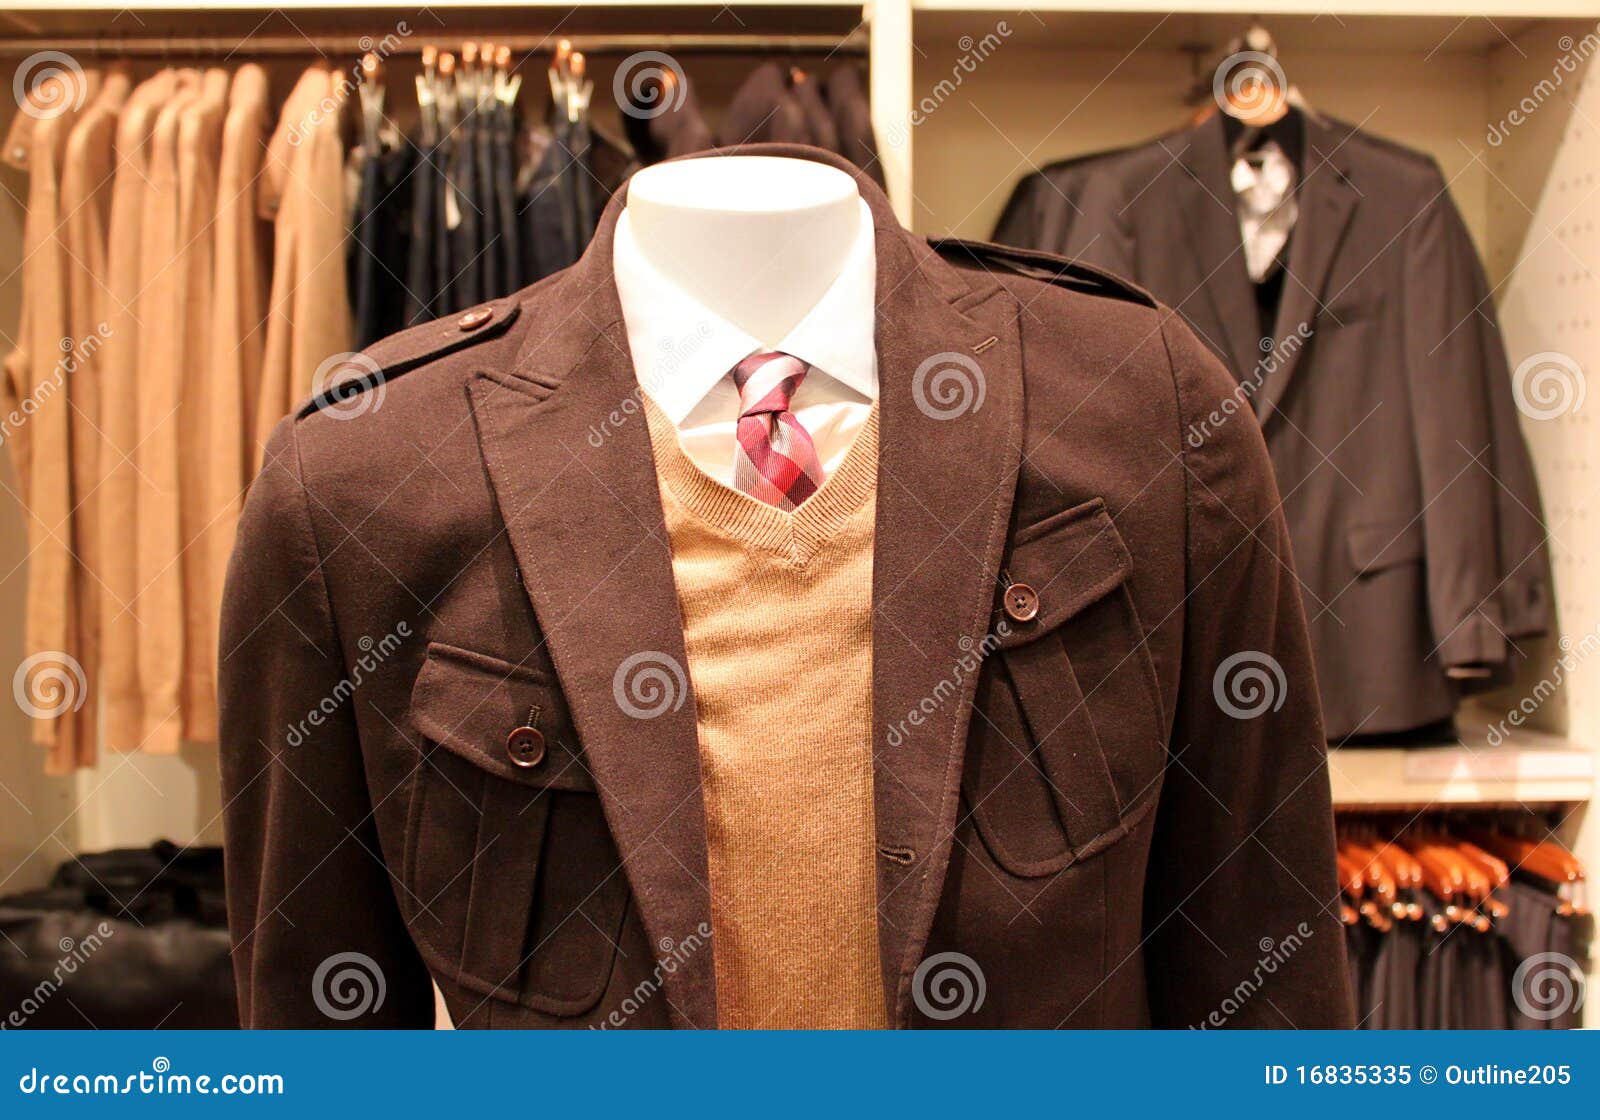 Menswear store stock image. Image of jackets, garment - 16835335